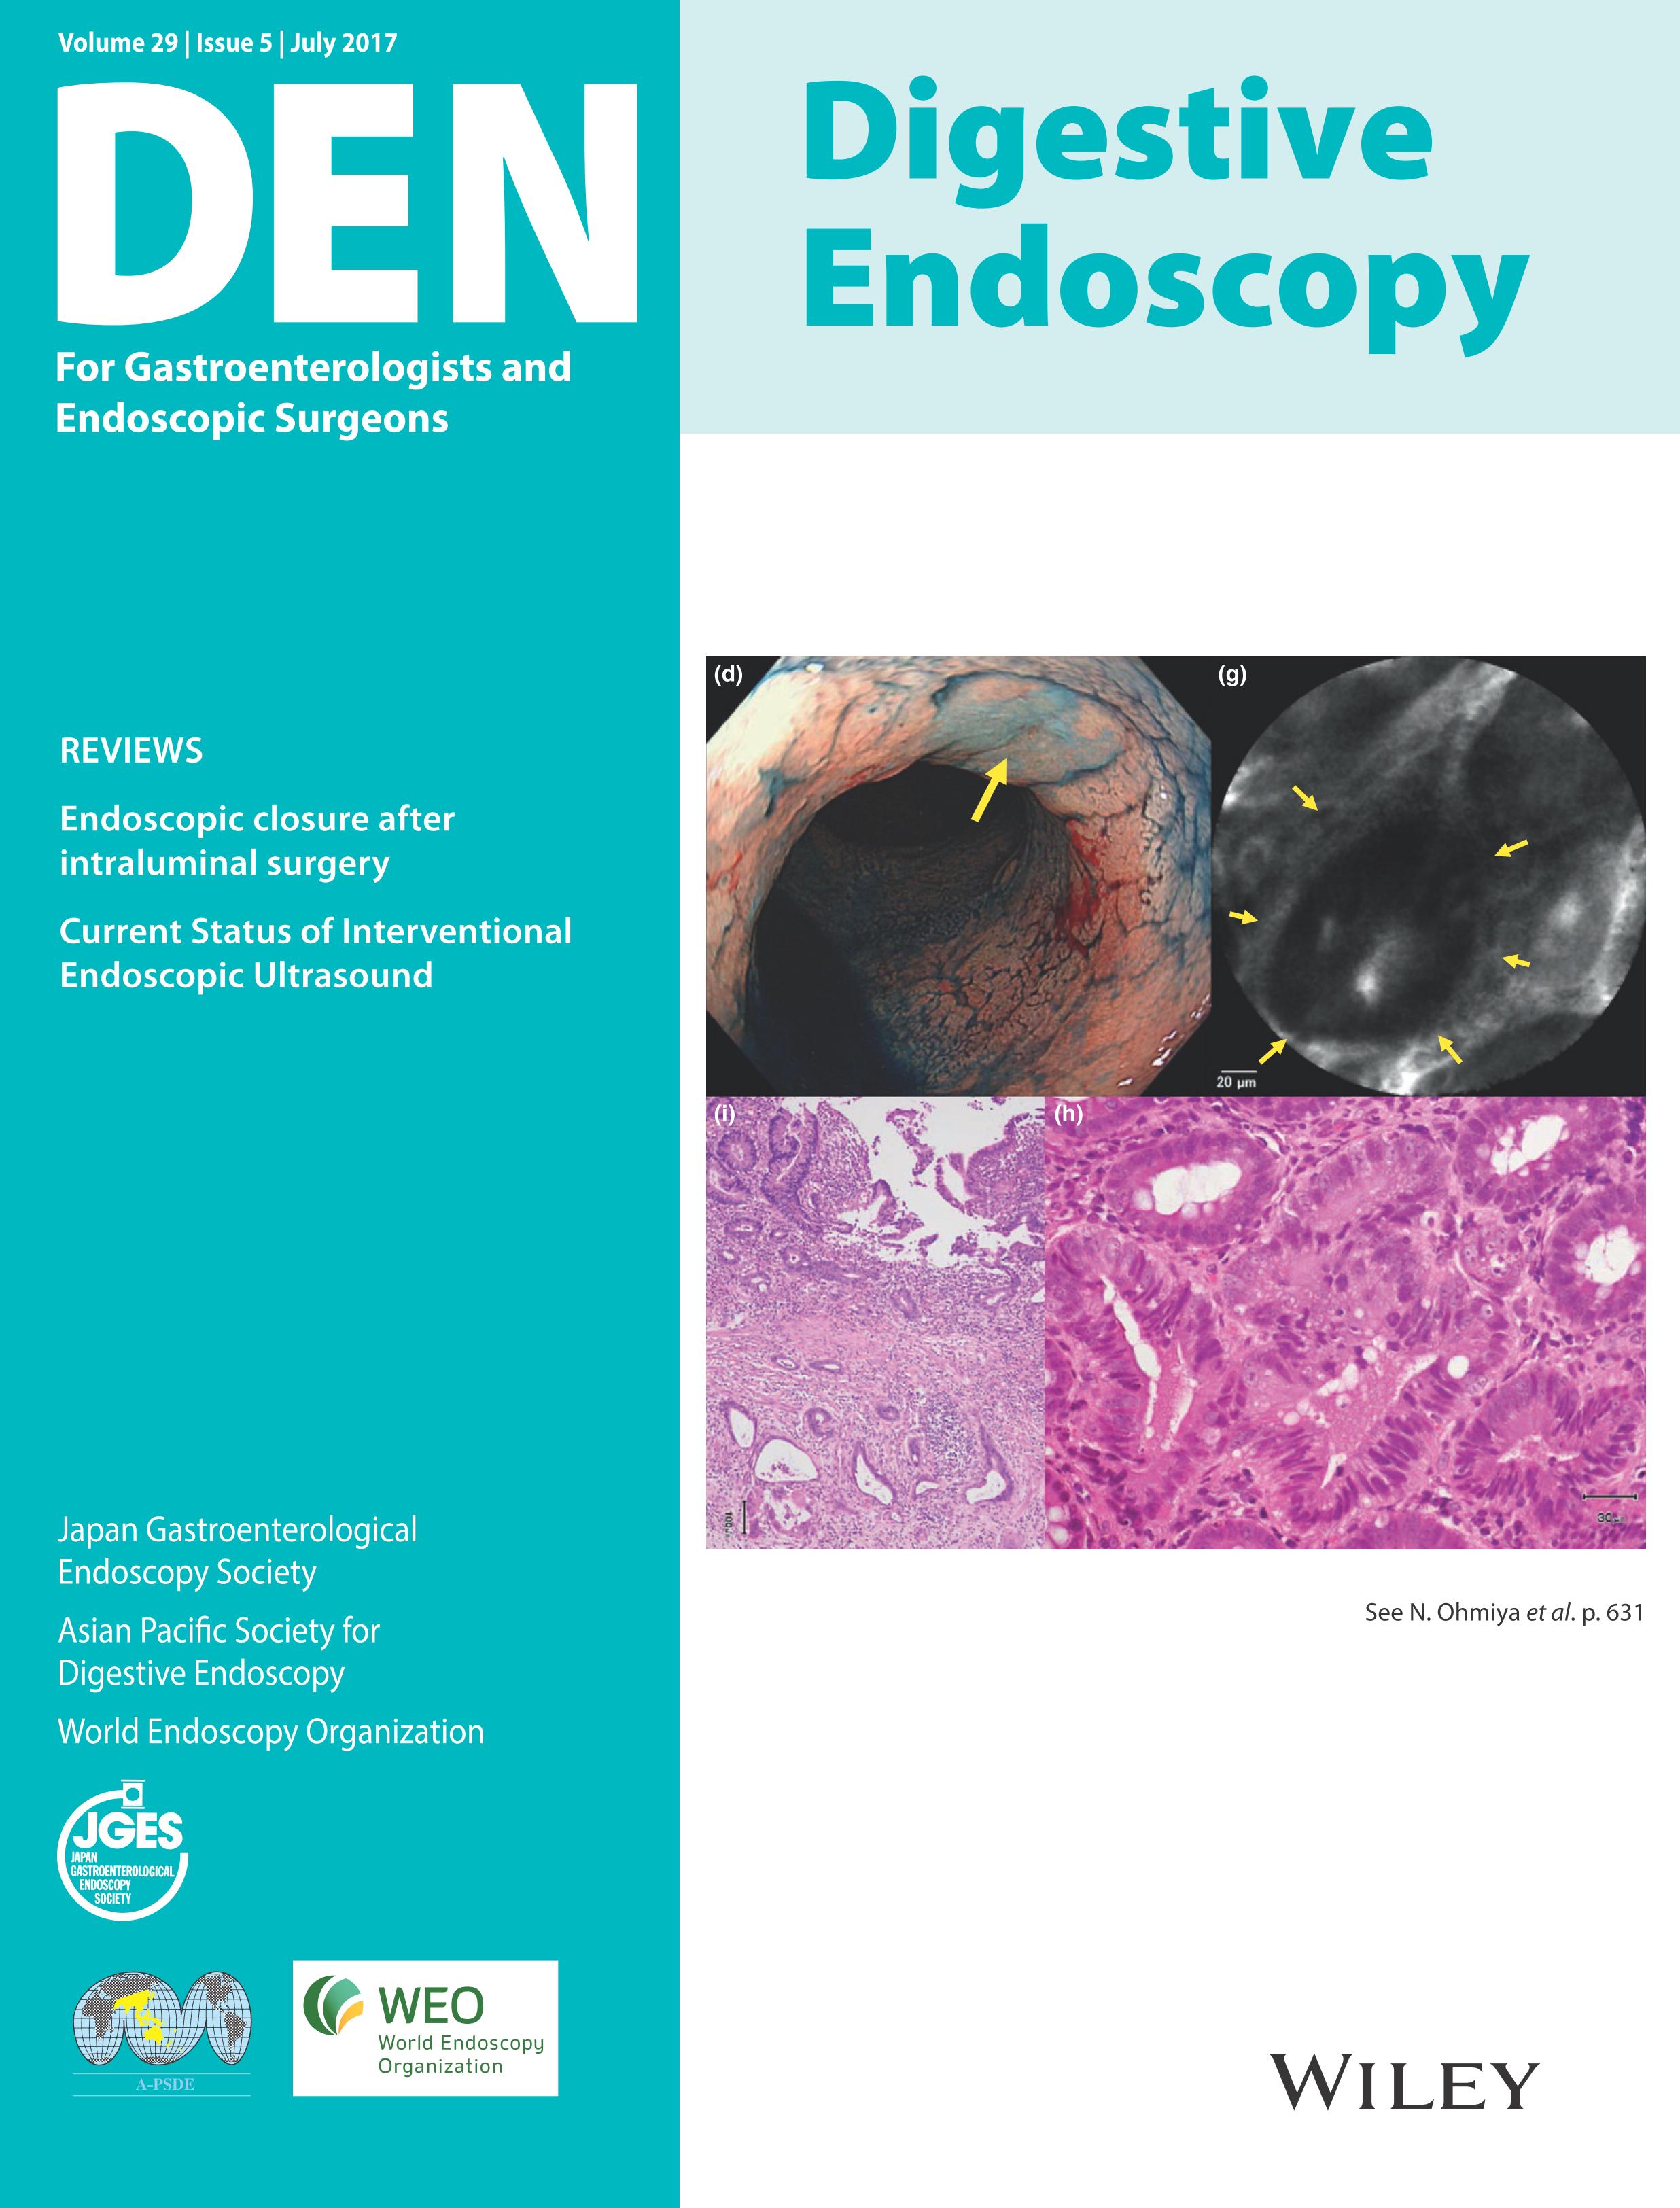 Digestive Endoscopy Vol29-5